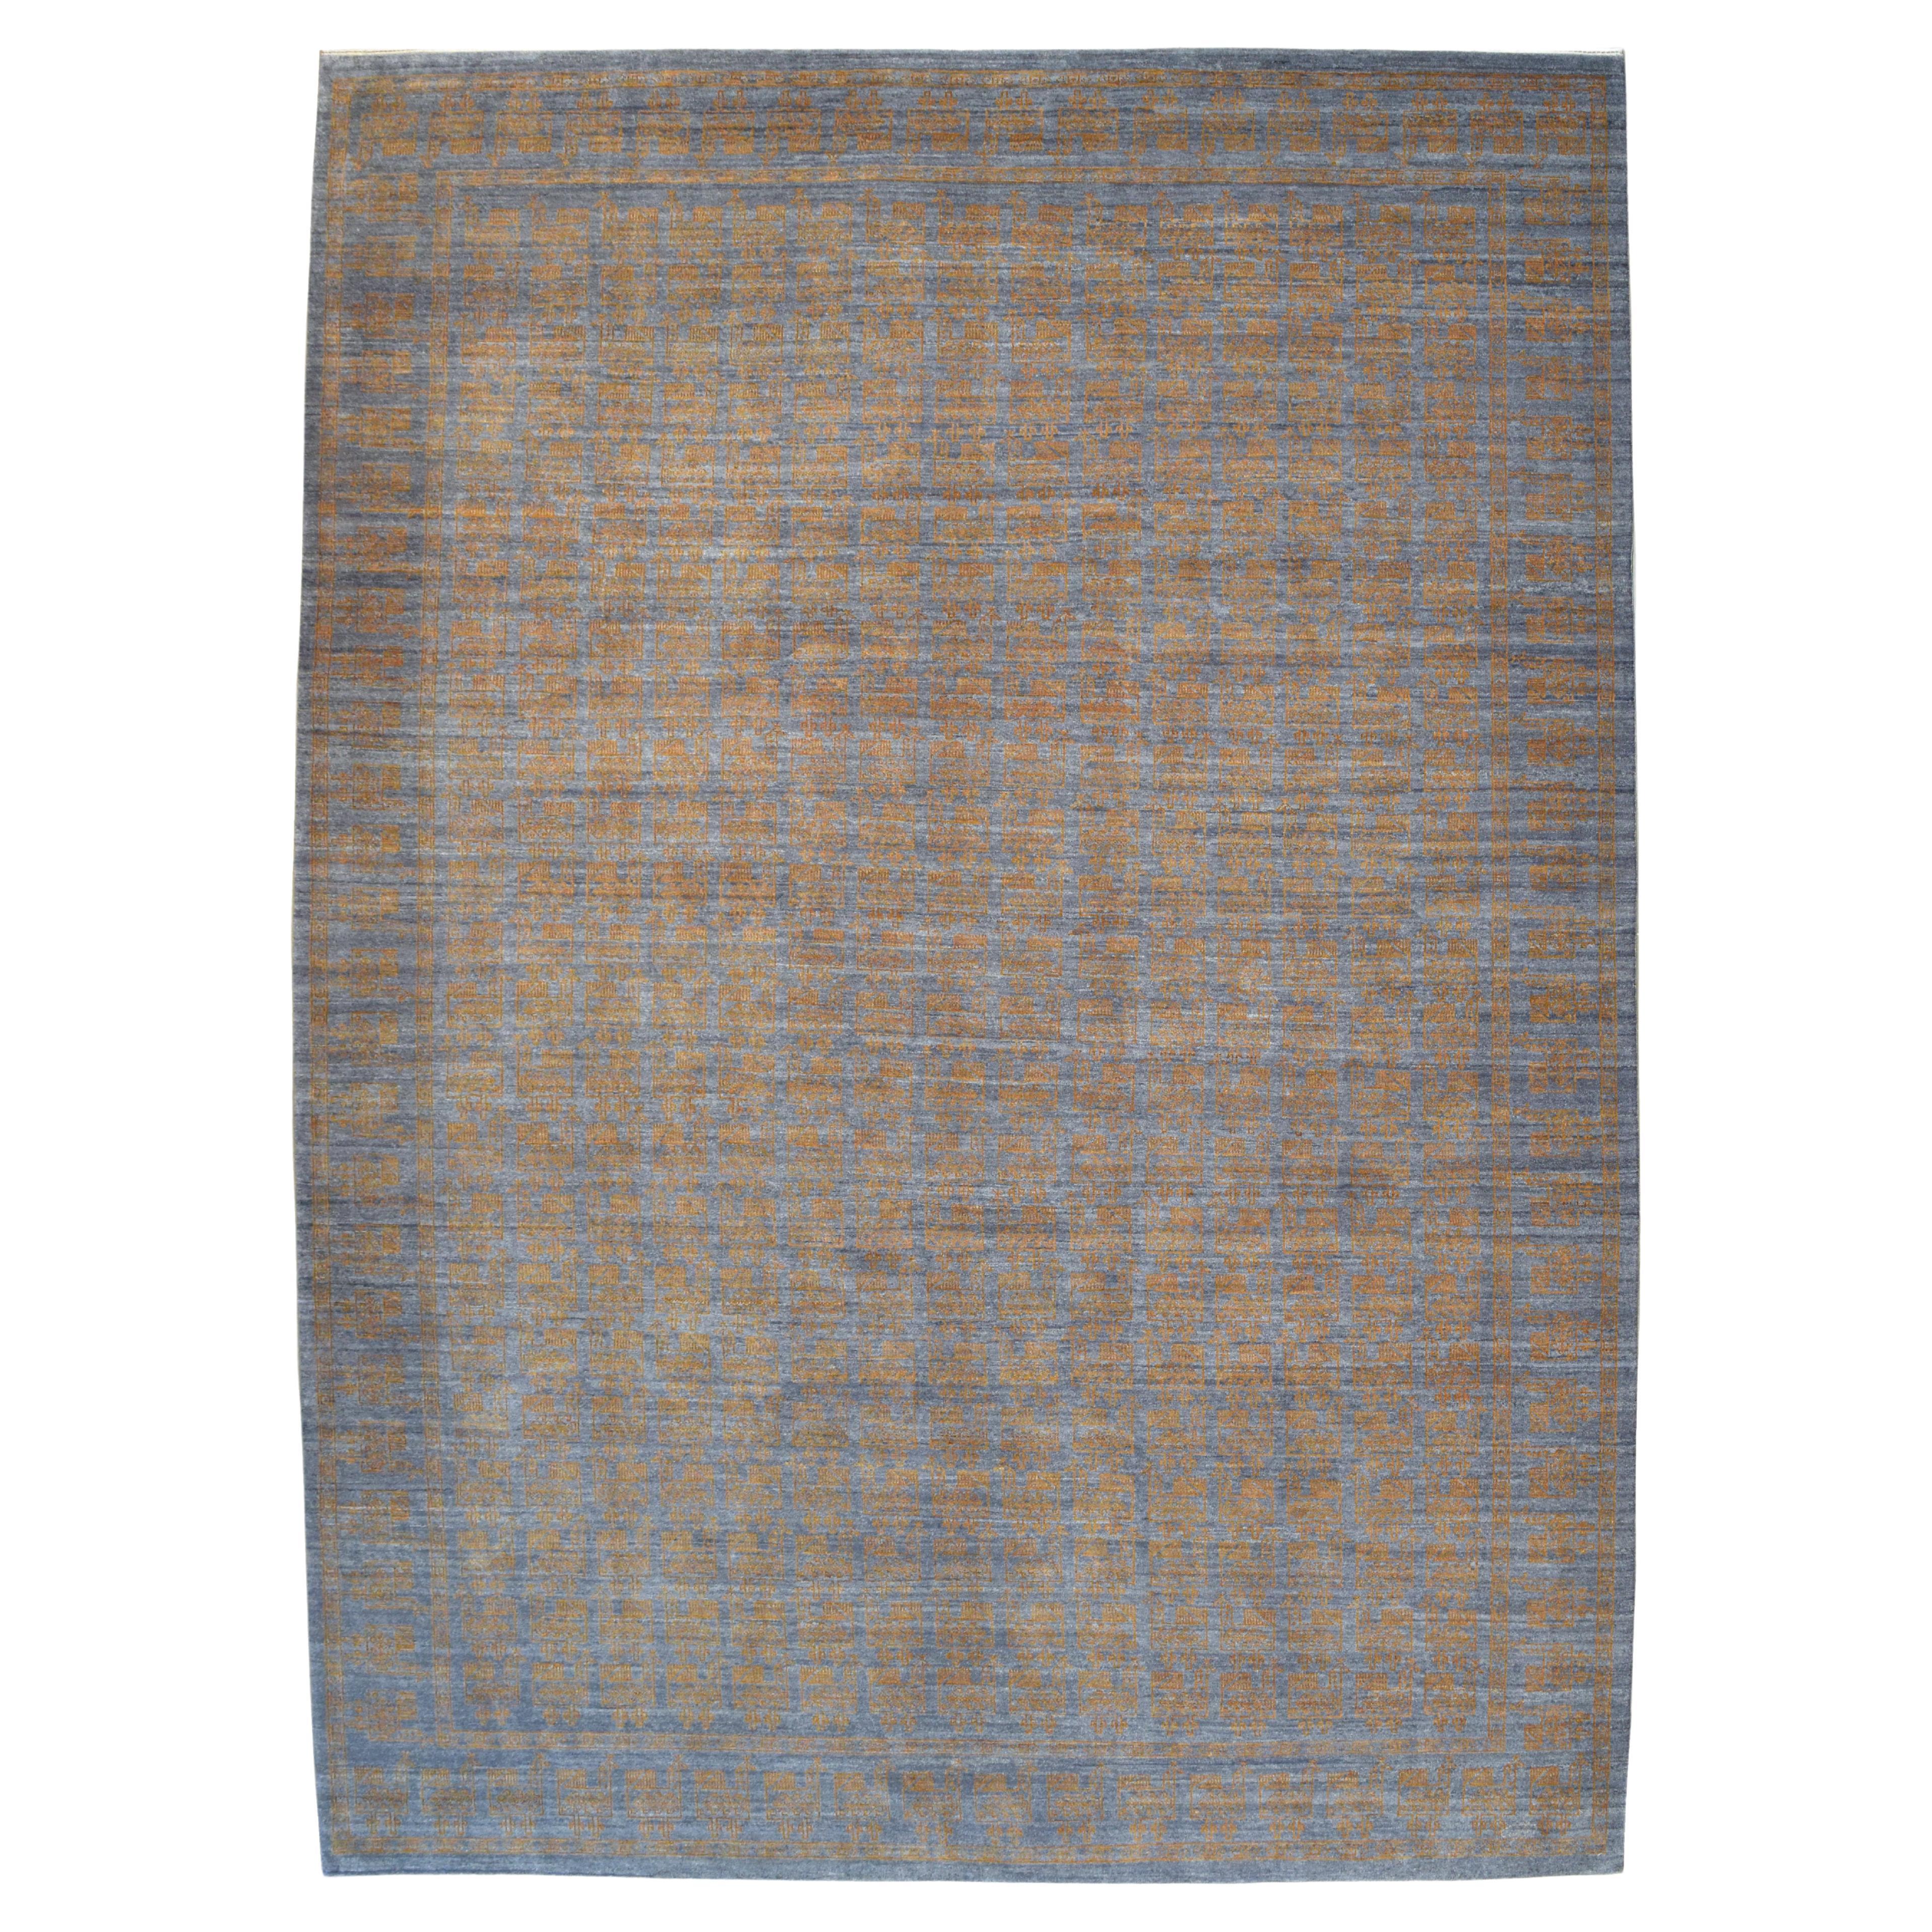 Orley Shabahang, Orange and Gray Contemporary Peacock Carpet, Wool, 9' x 12'